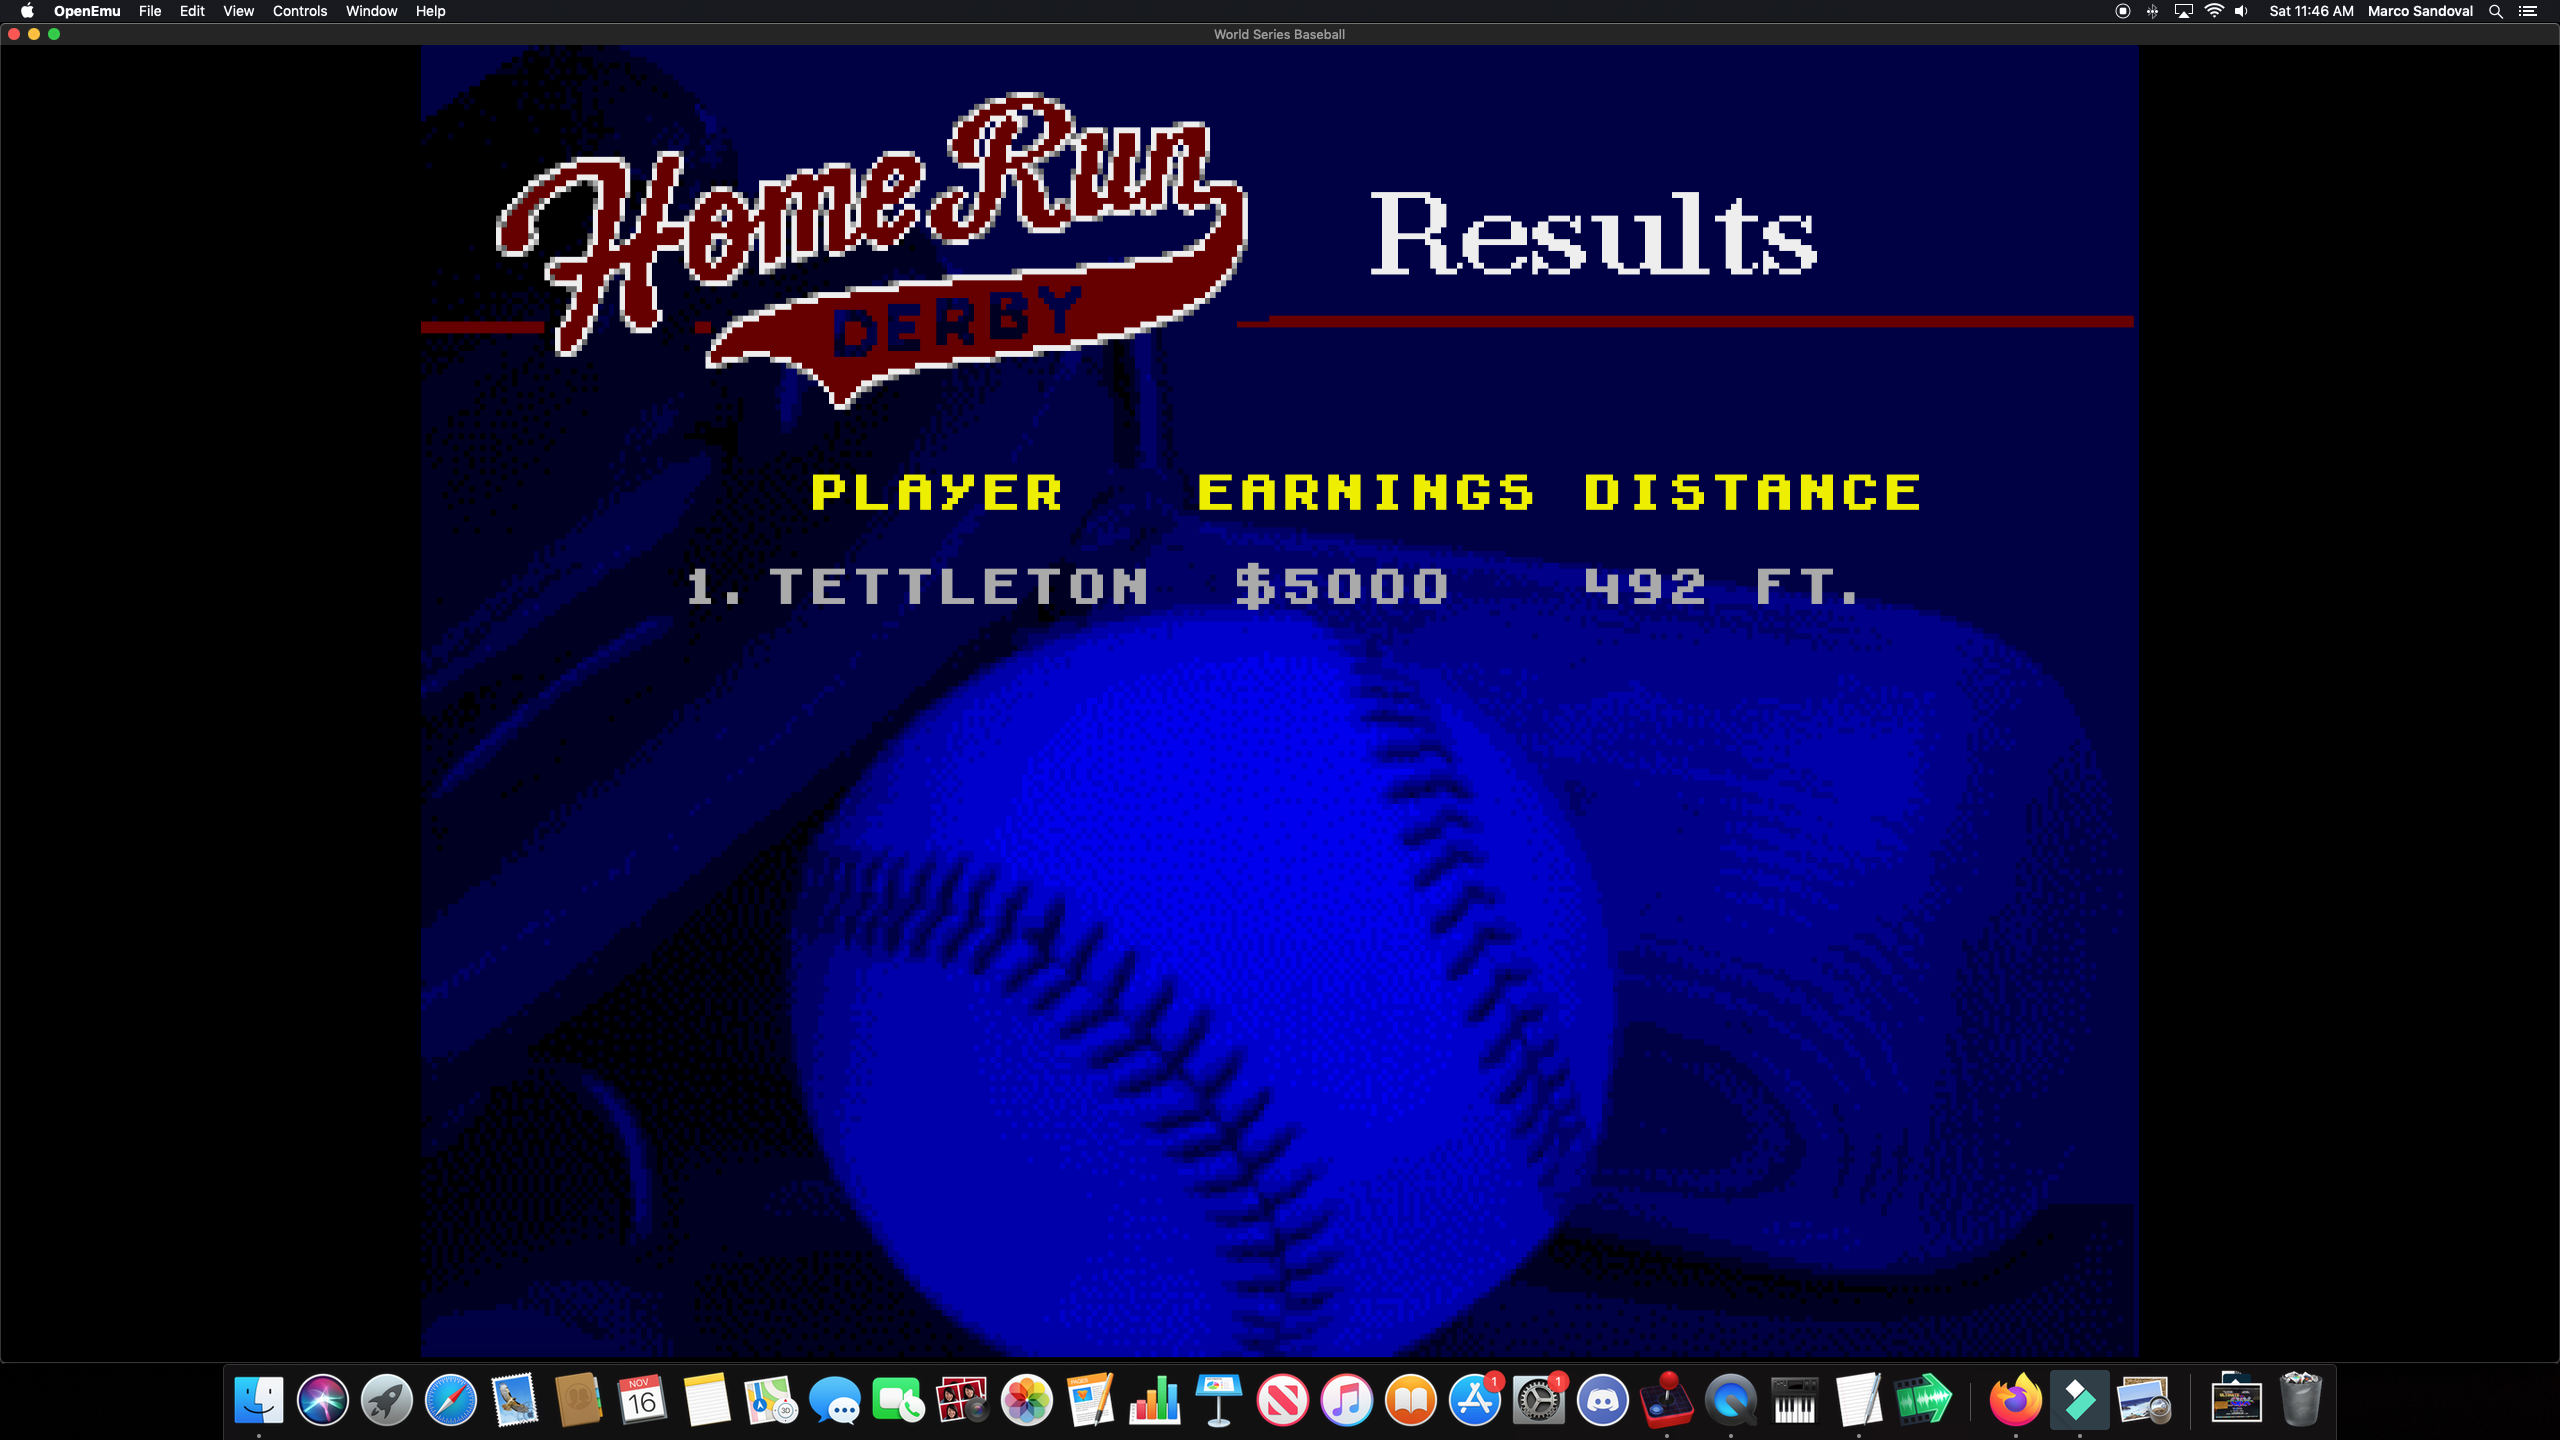 World Series Baseball: Home Run Derby [Longest Home Run in Feet] 492 points